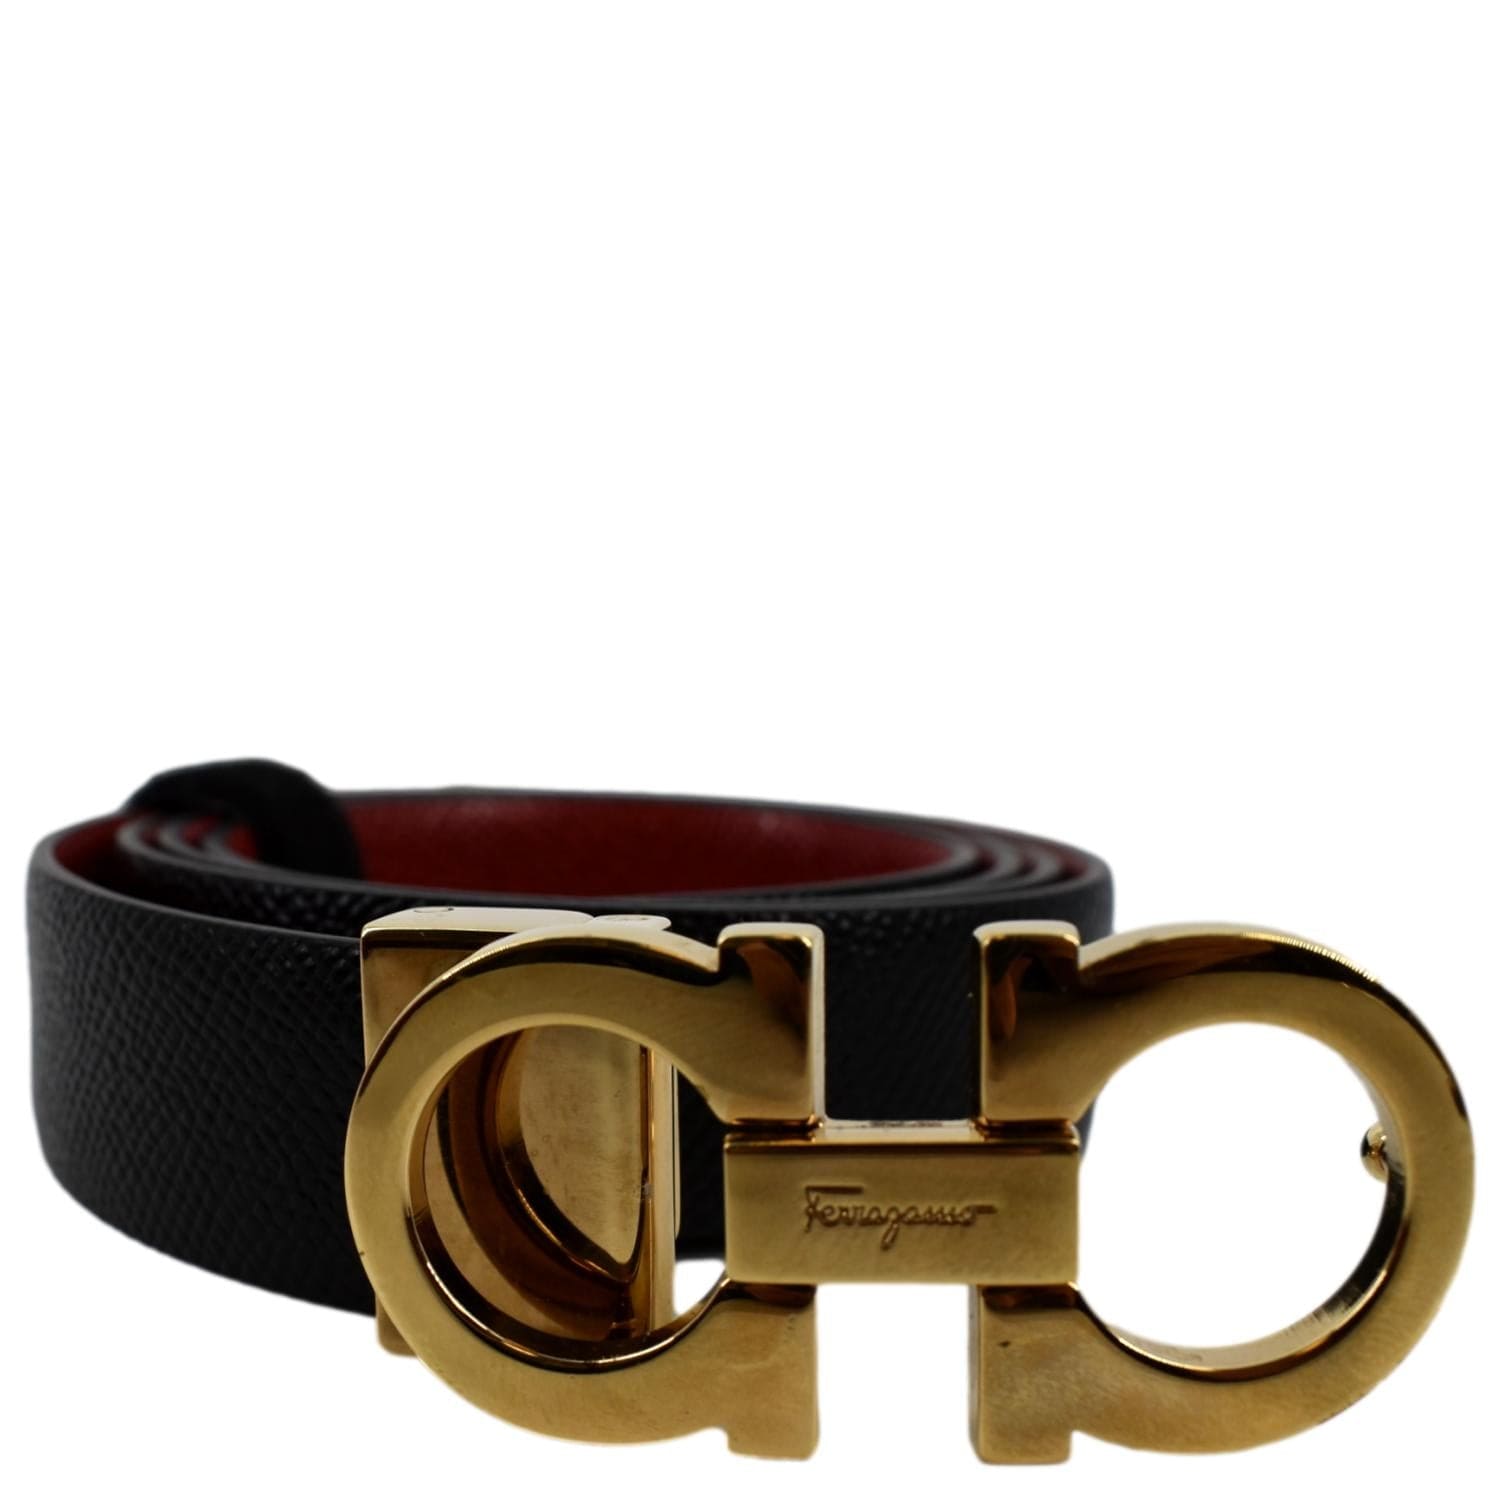 Gancini-buckle leather belt, Ferragamo